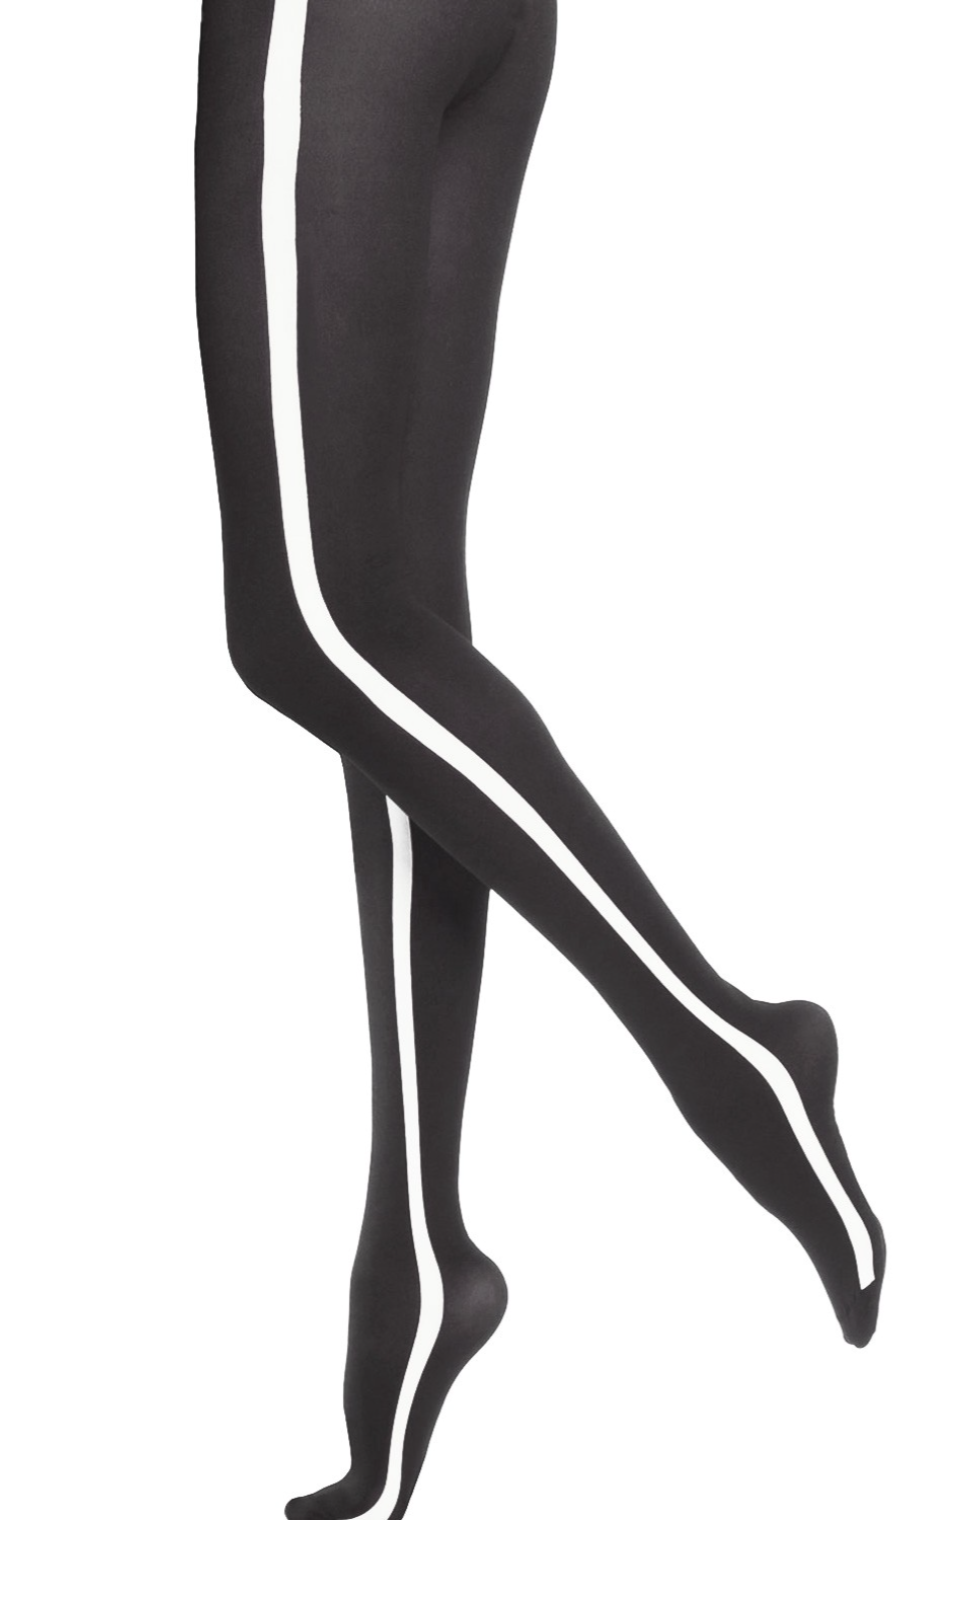 Emilio Cavallini Sport Band Tights - Black opaque fashion tights with a white side sports style stripe.